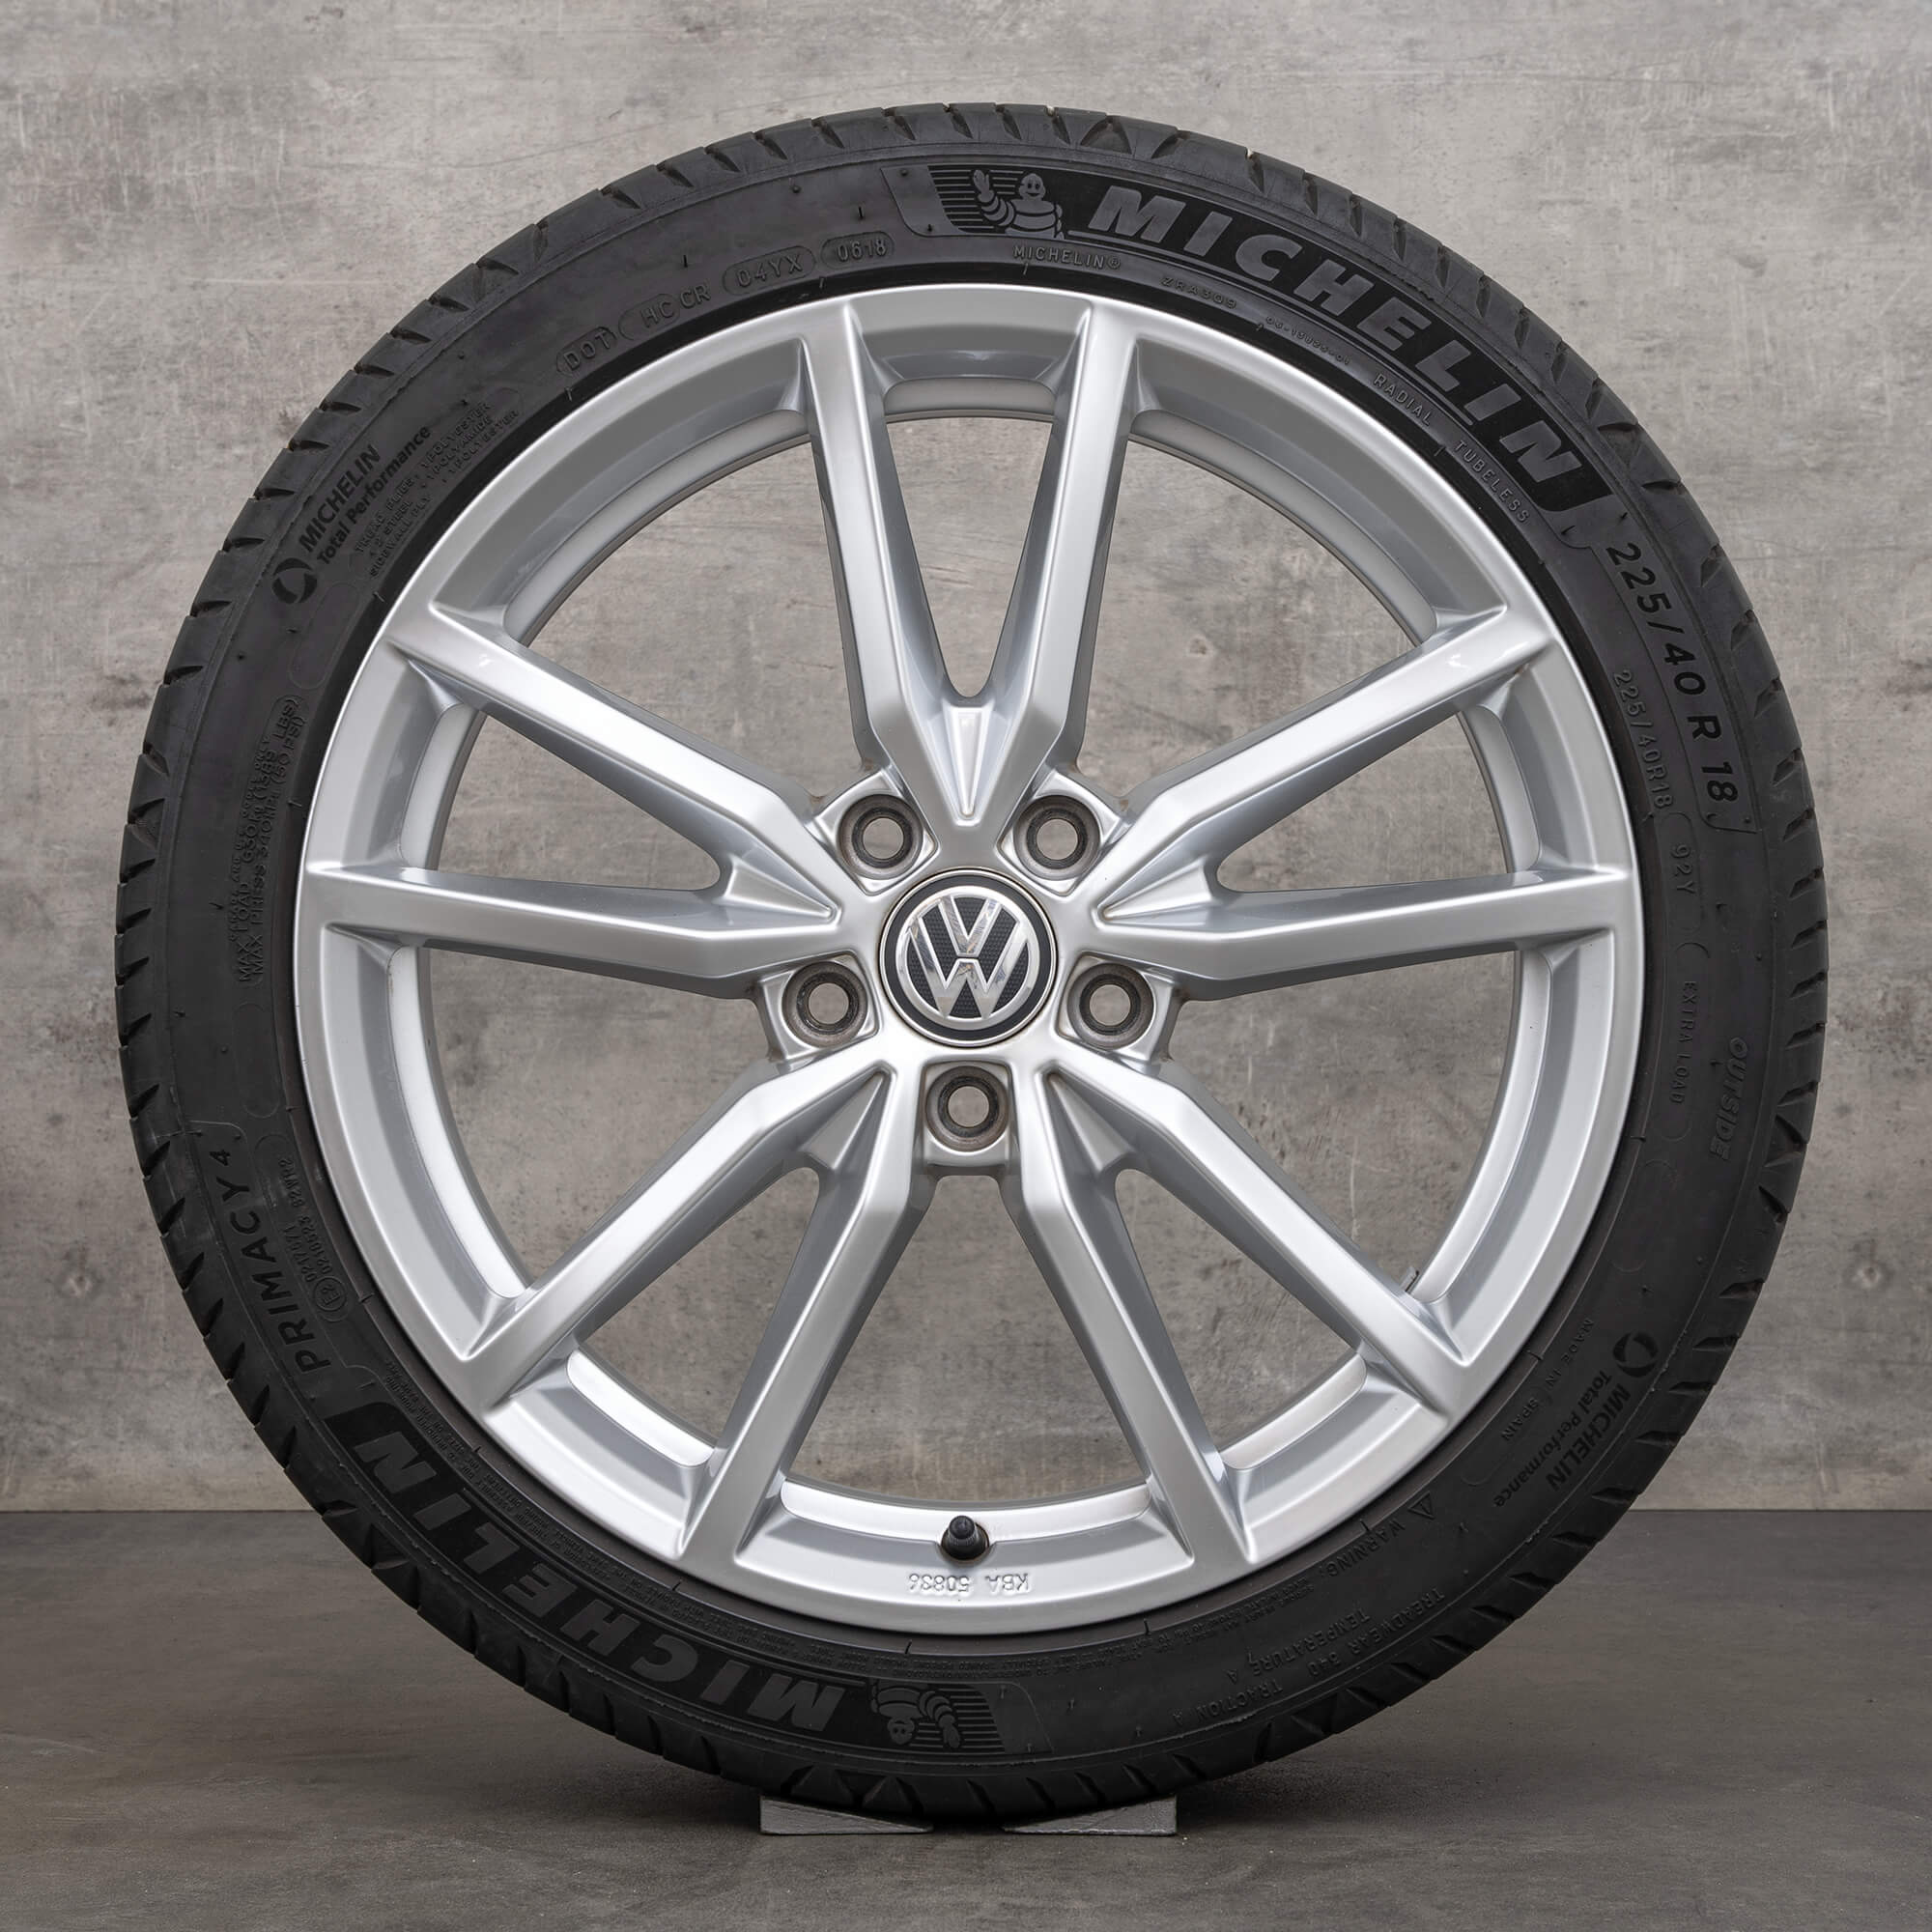 VW Golf 6 7 8 ruote estive pneumatici estivi cerchi da 18 pollici Pretoria